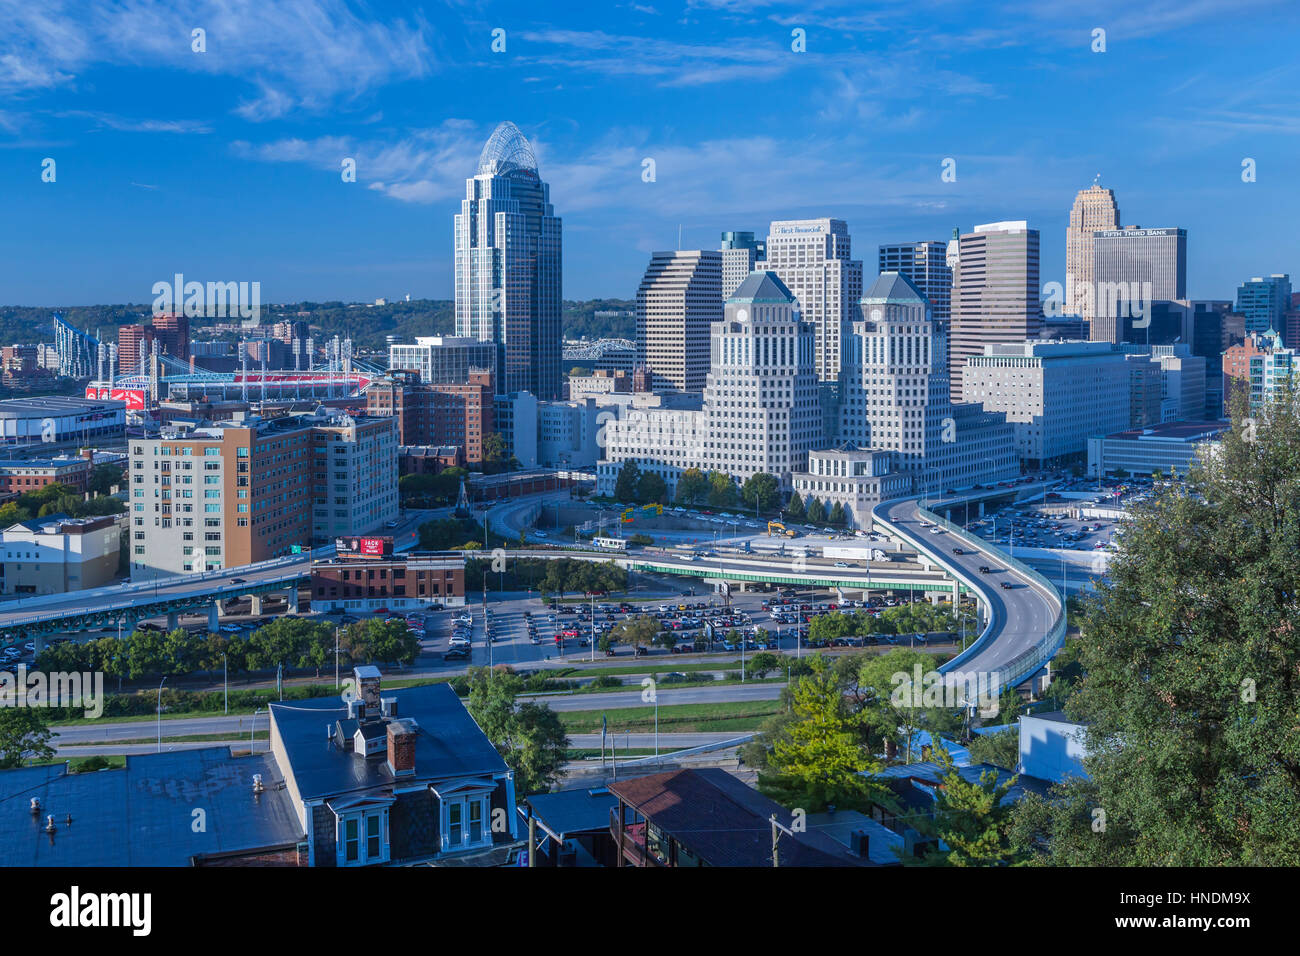 La ville de Cincinnati, Ohio, USA. Banque D'Images